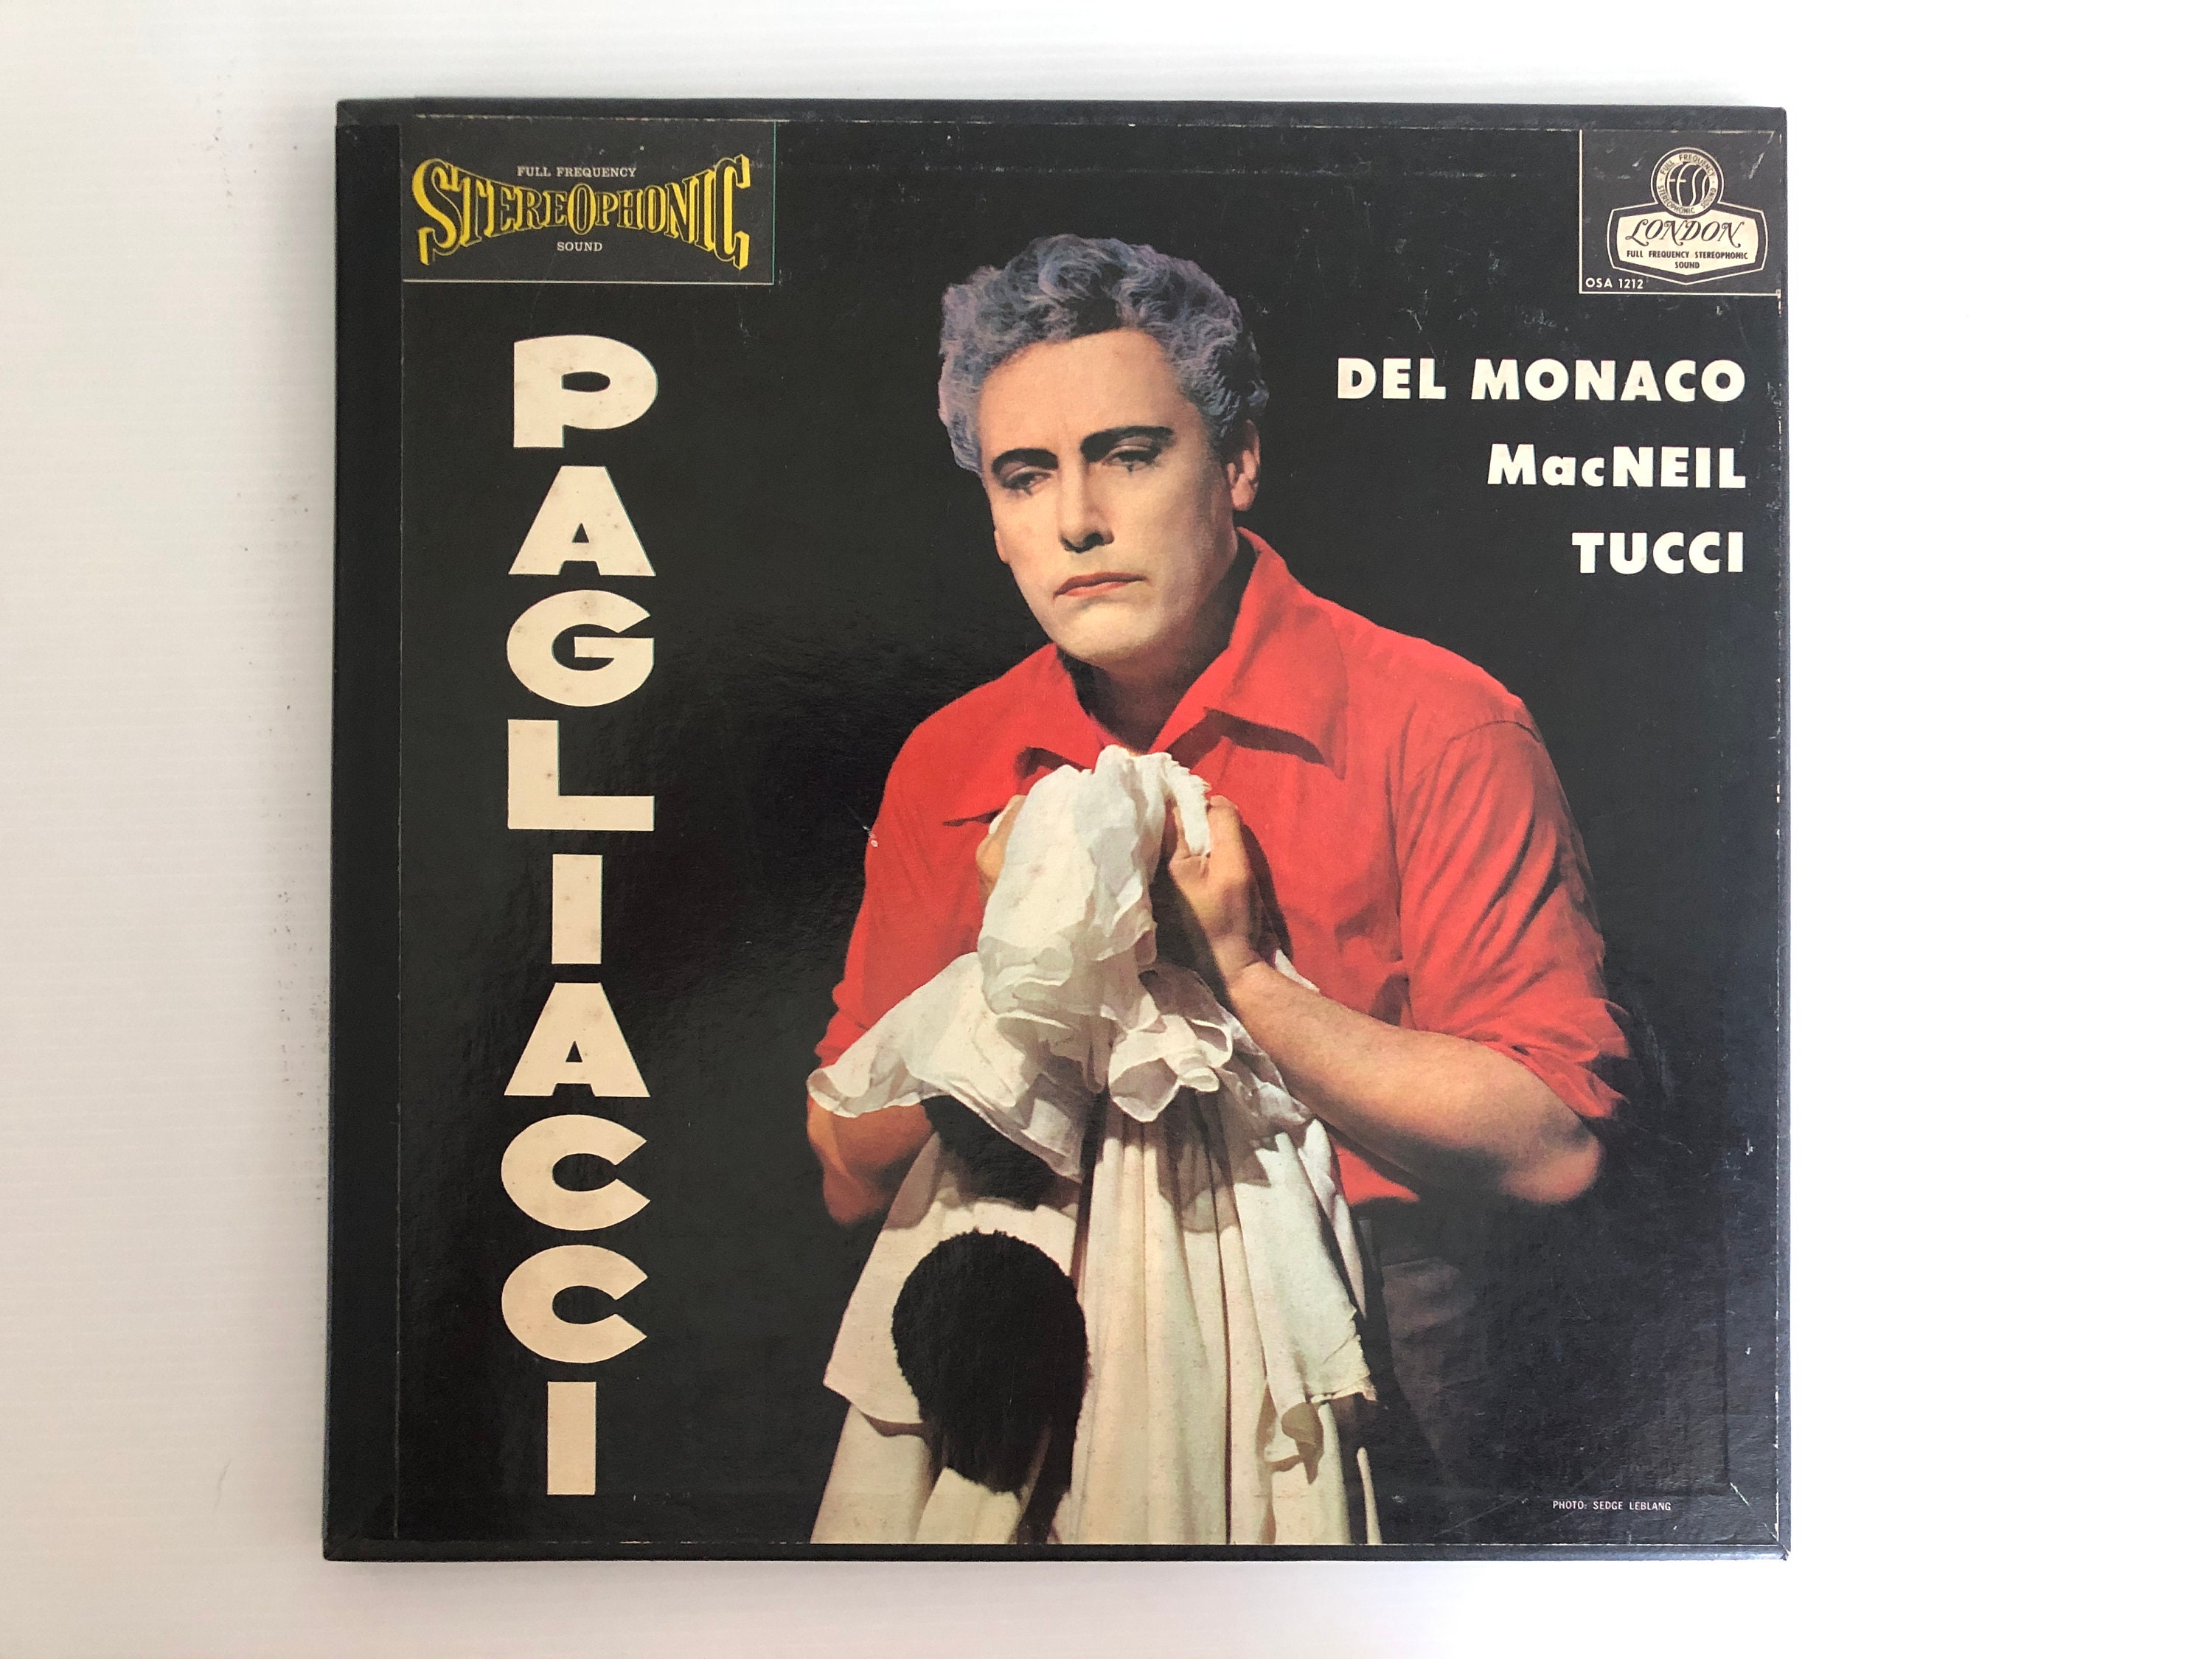 Film Pagliacci Leoncavallo Italy Movie Theater Show Clowns Vintage Poster  Repro